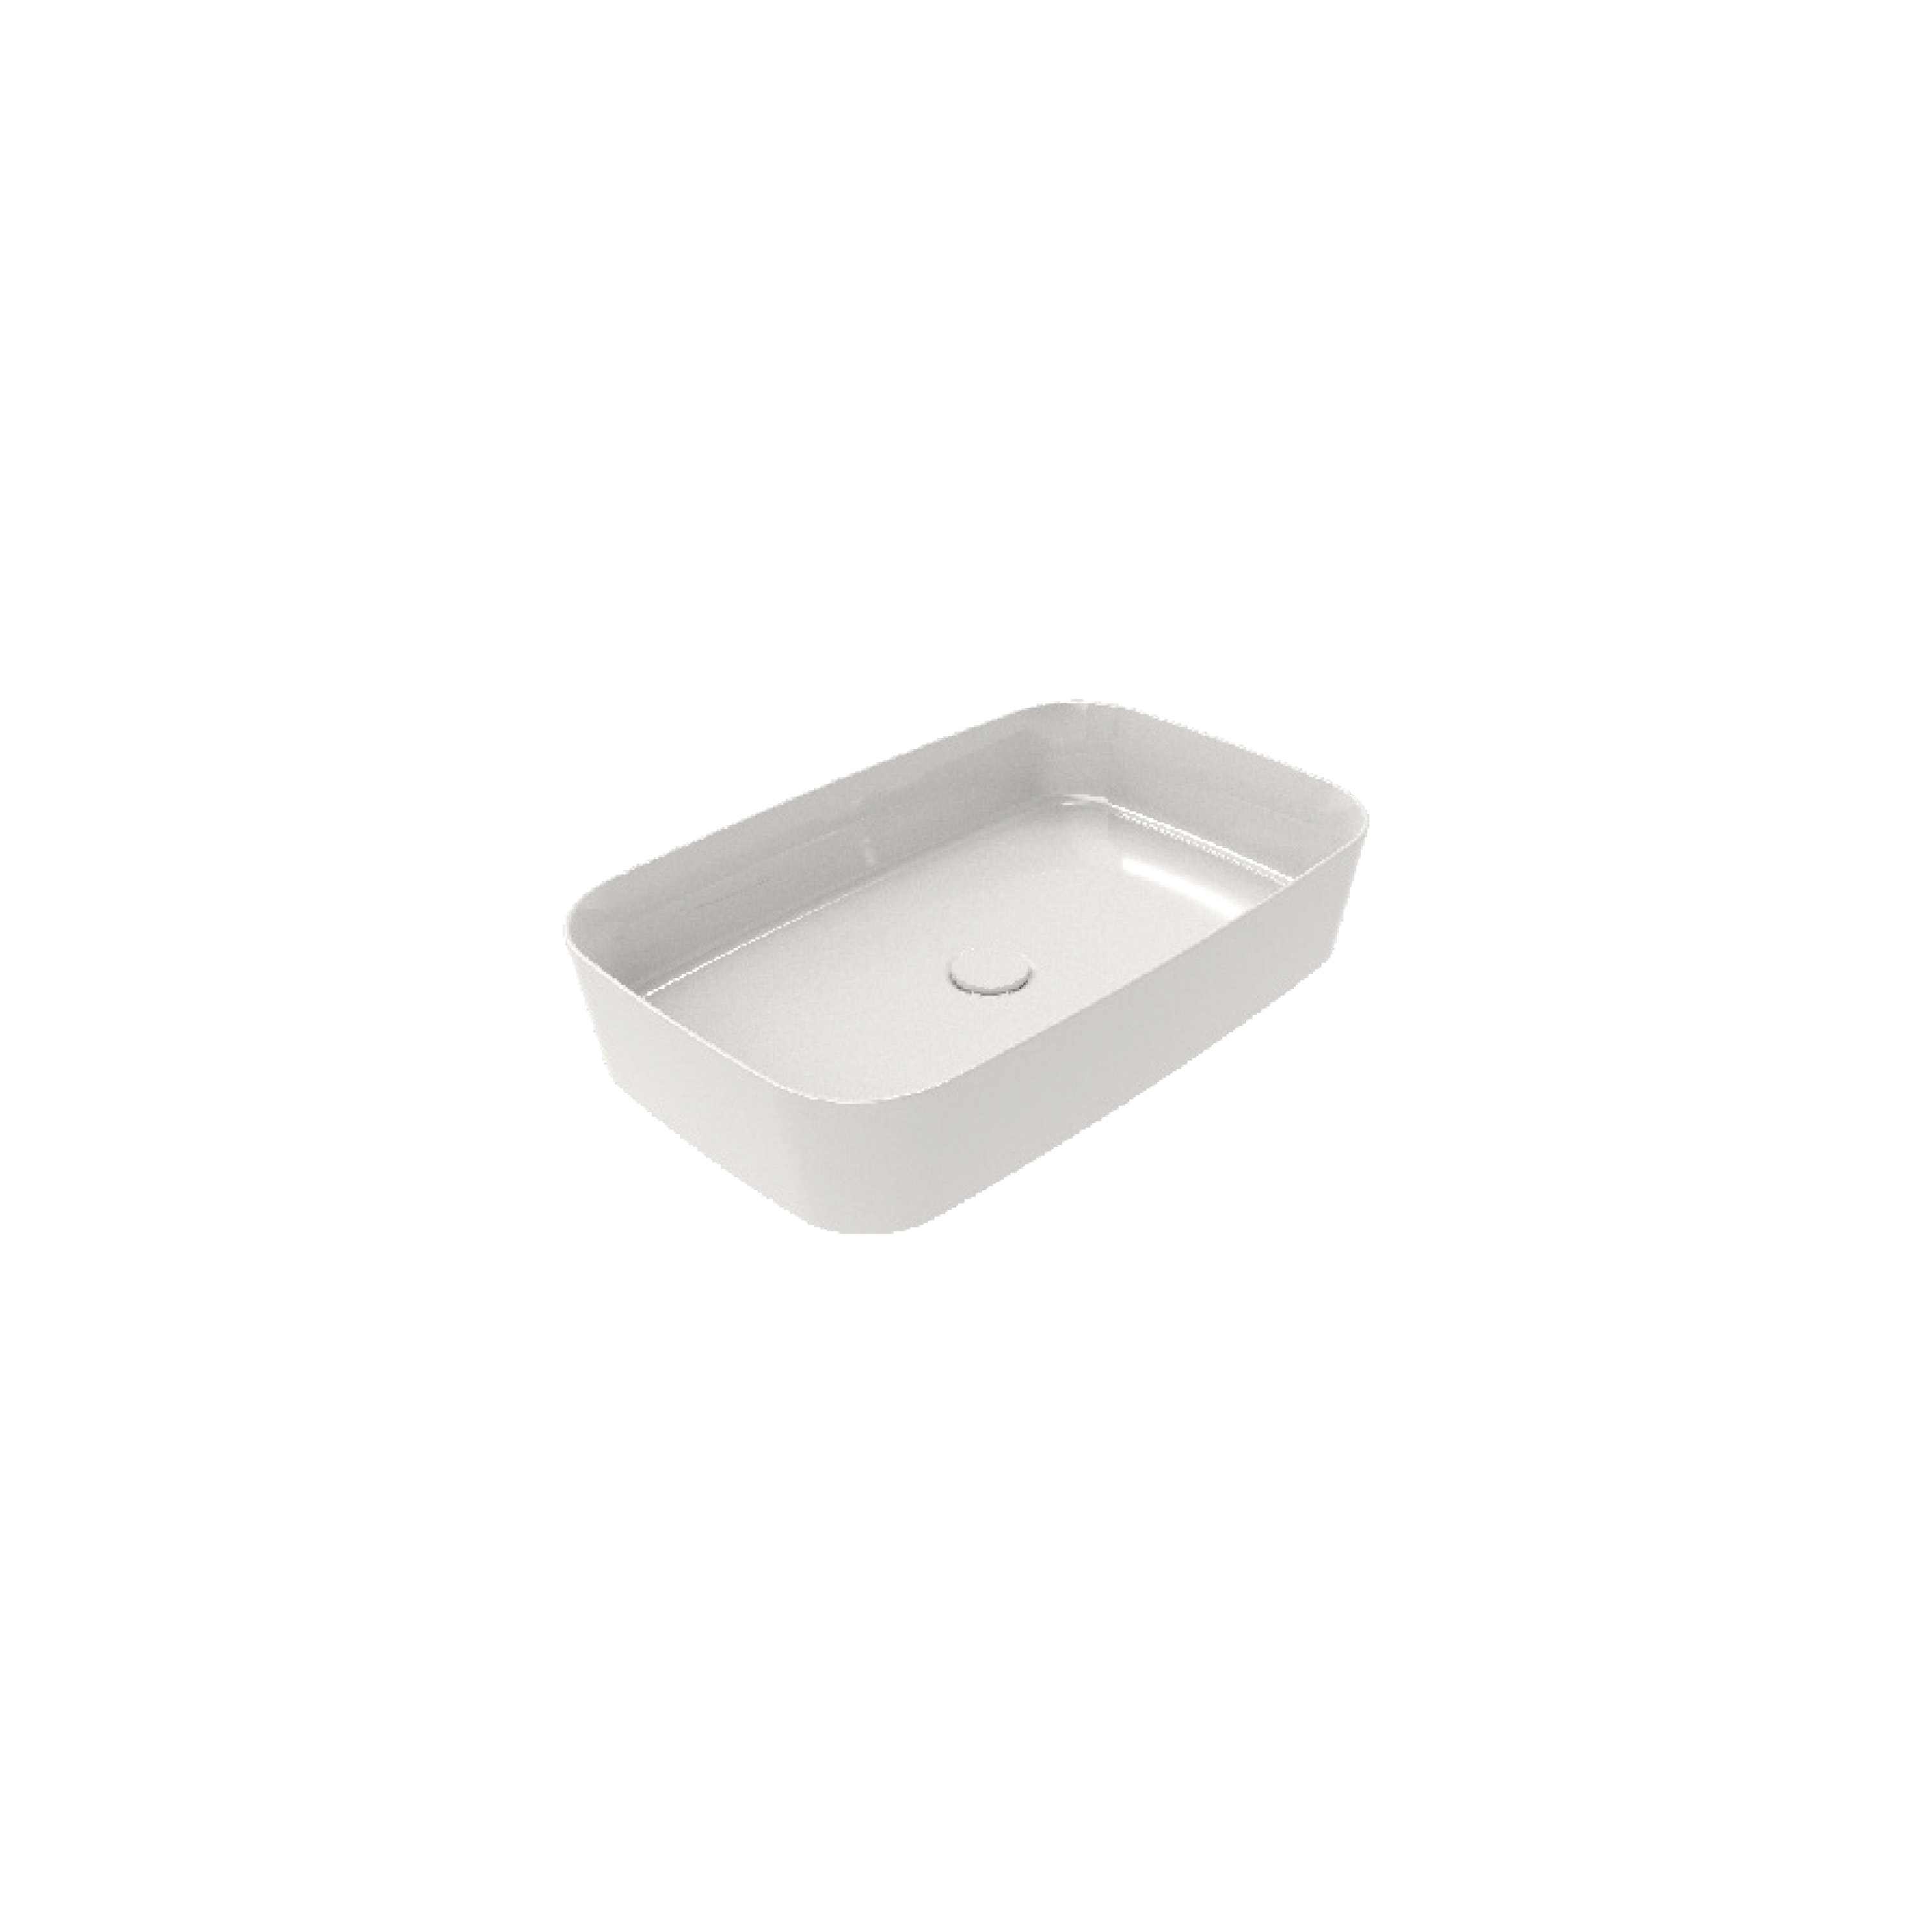 PEAK Countertop Washbasin, 60 cm